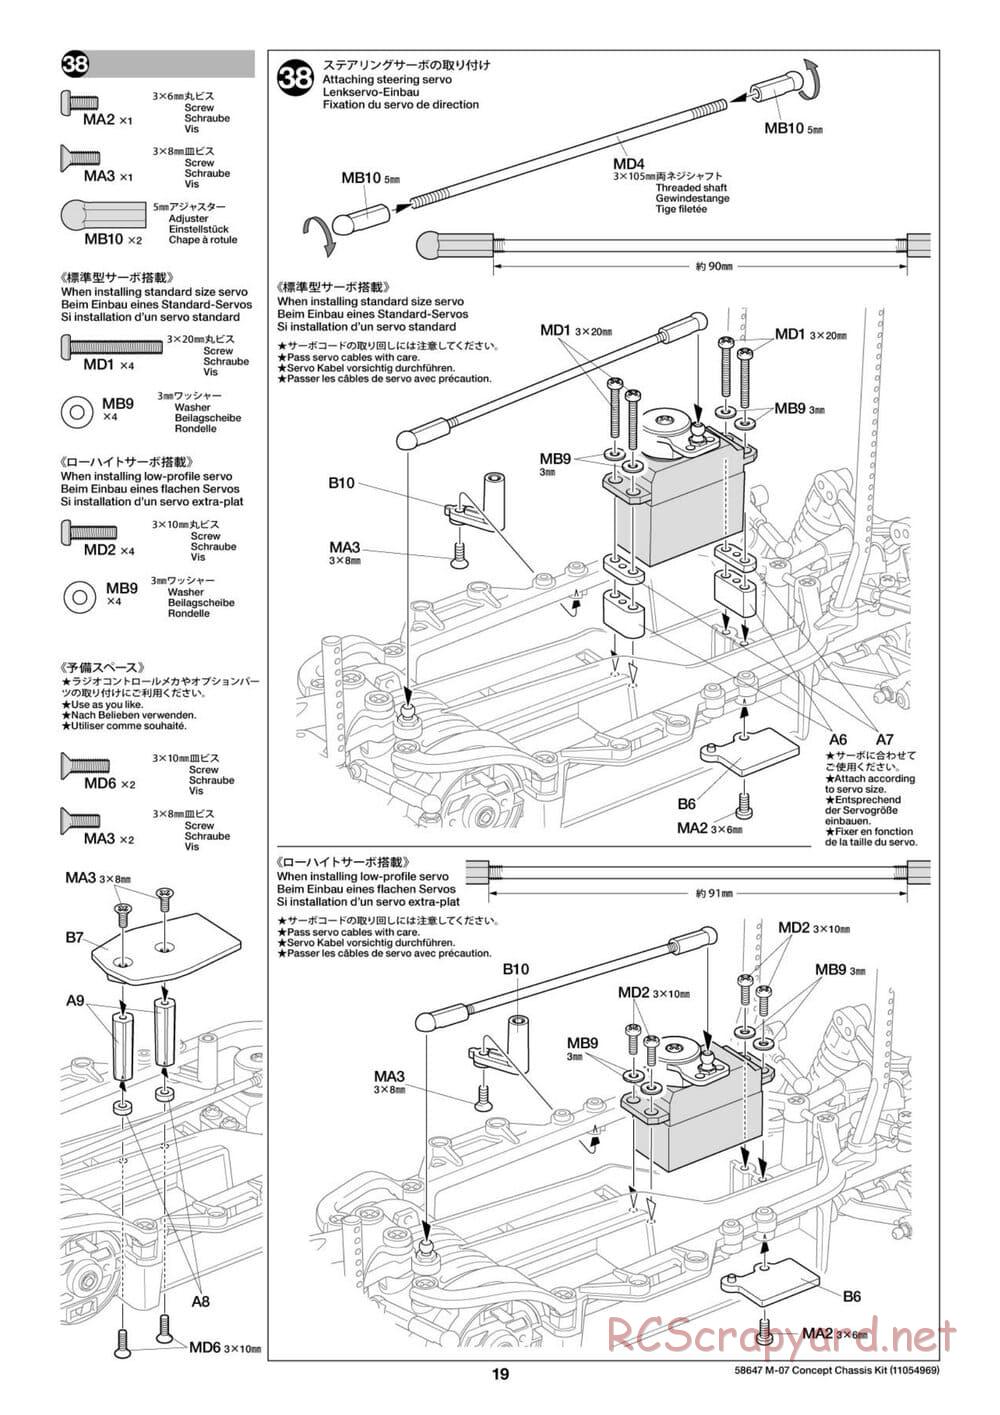 Tamiya - M-07 Concept Chassis - Manual - Page 19